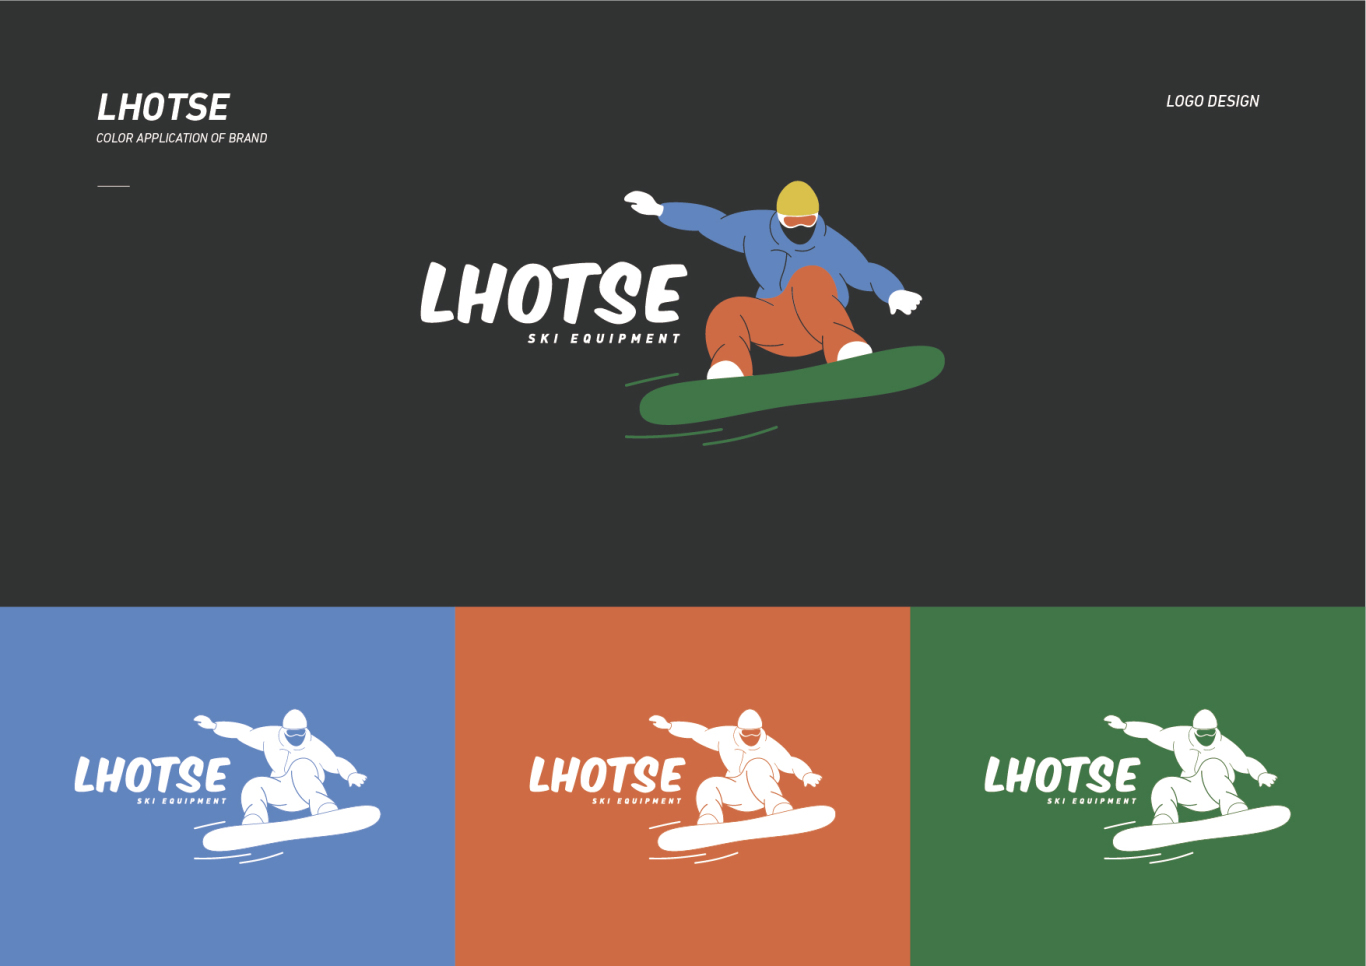 Lhotse滑雪器材logo設計圖19